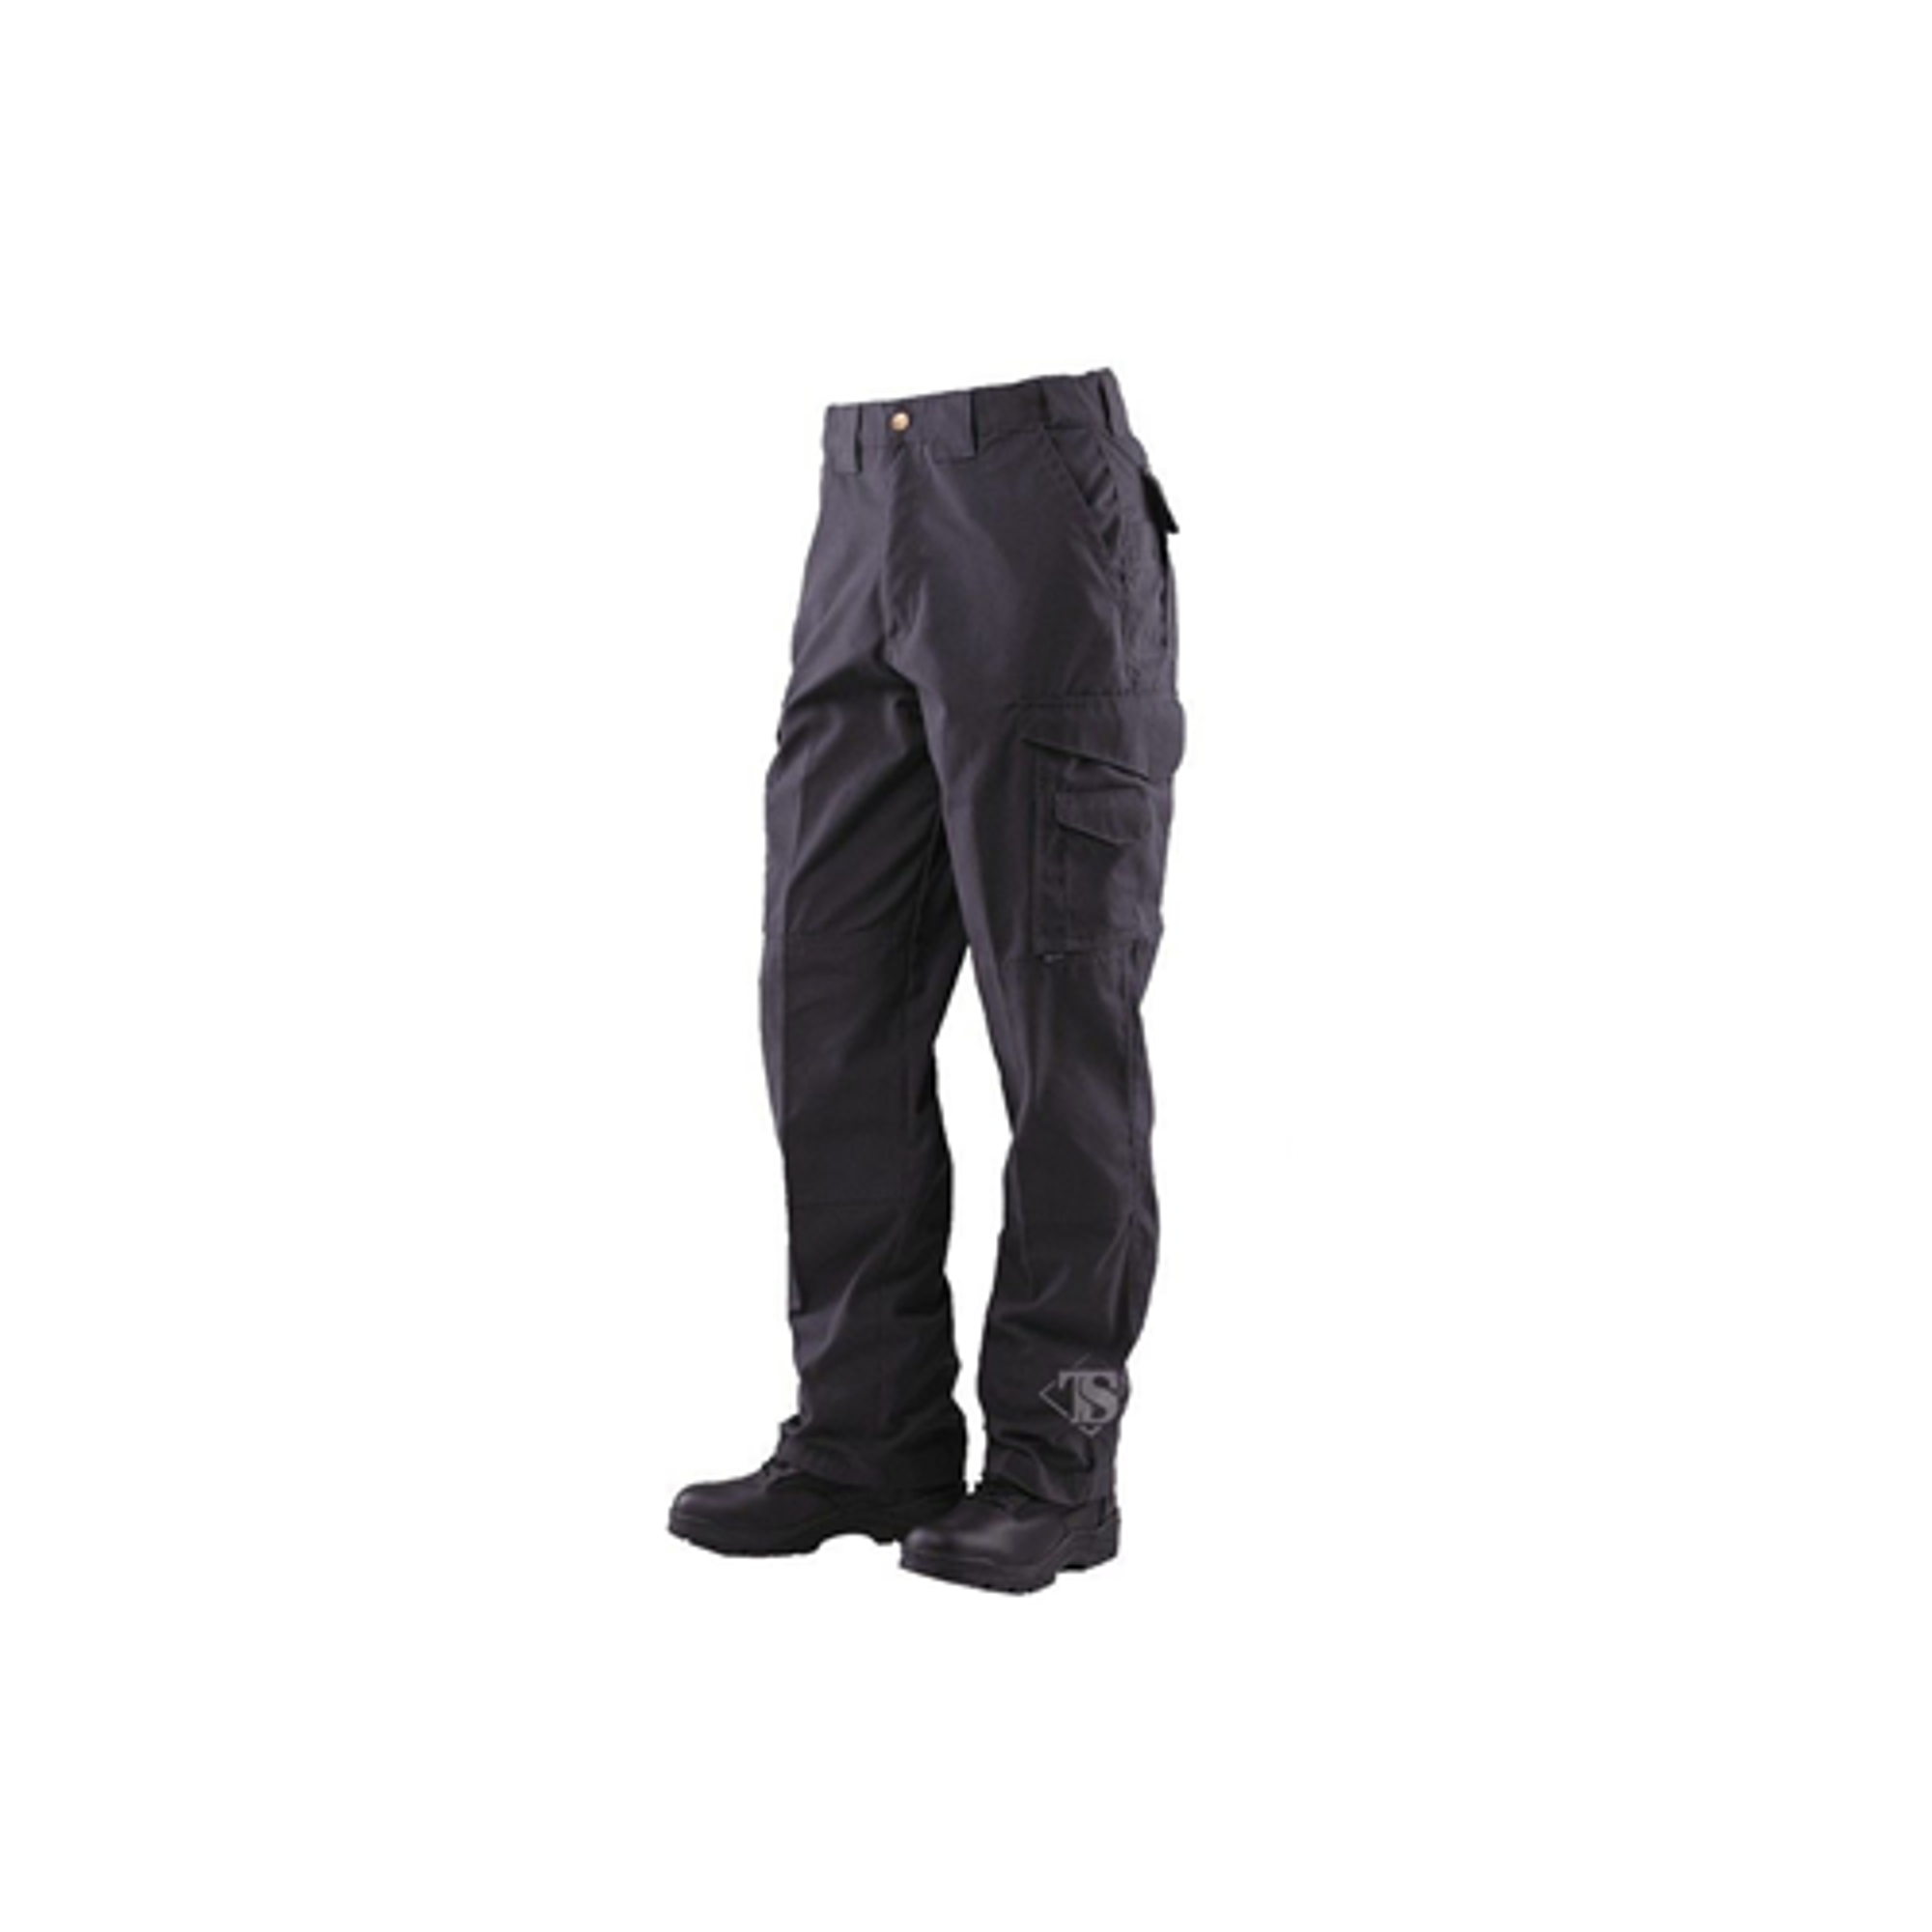 24-7 Original Tactical Pants - 6.5oz - Black - KRTSP-1062009